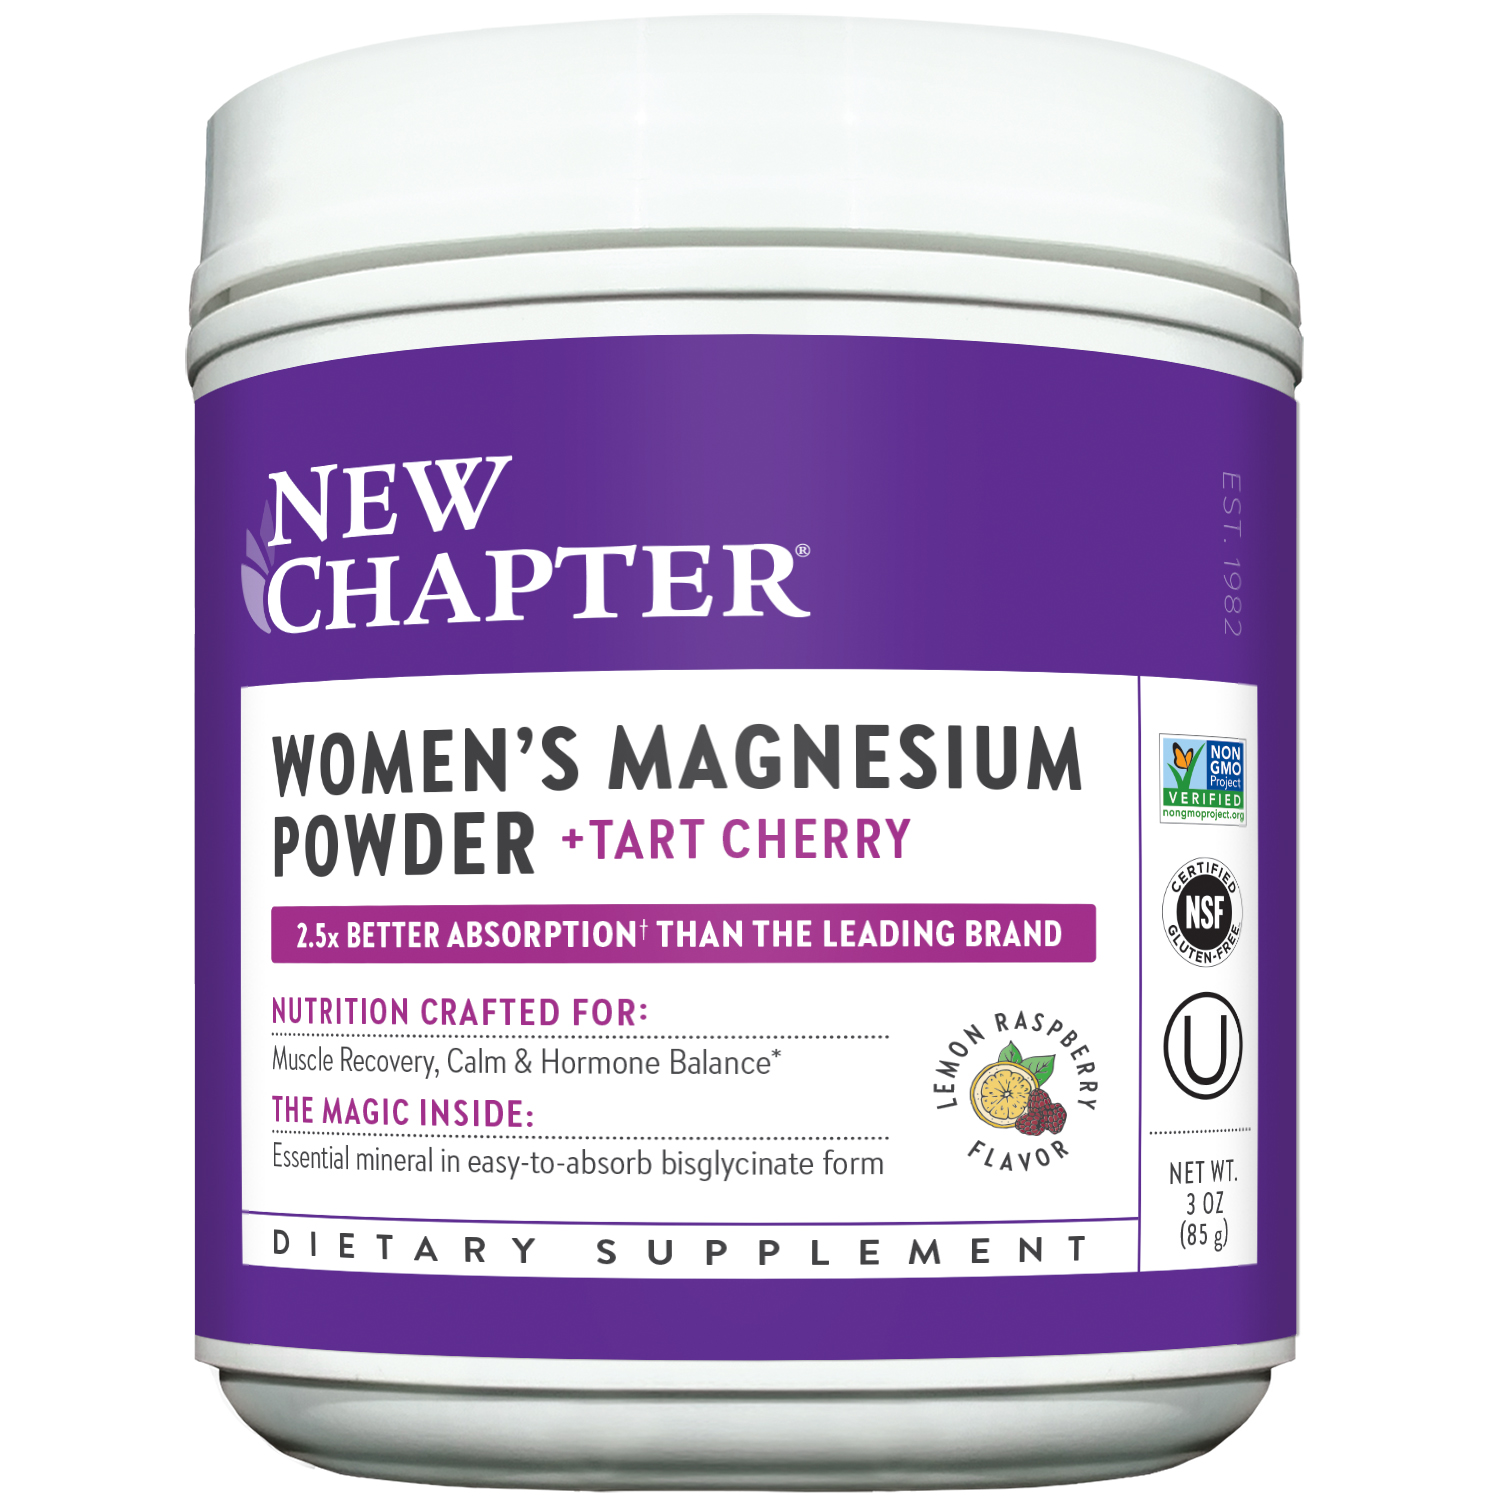 Women's Magnesium Powder